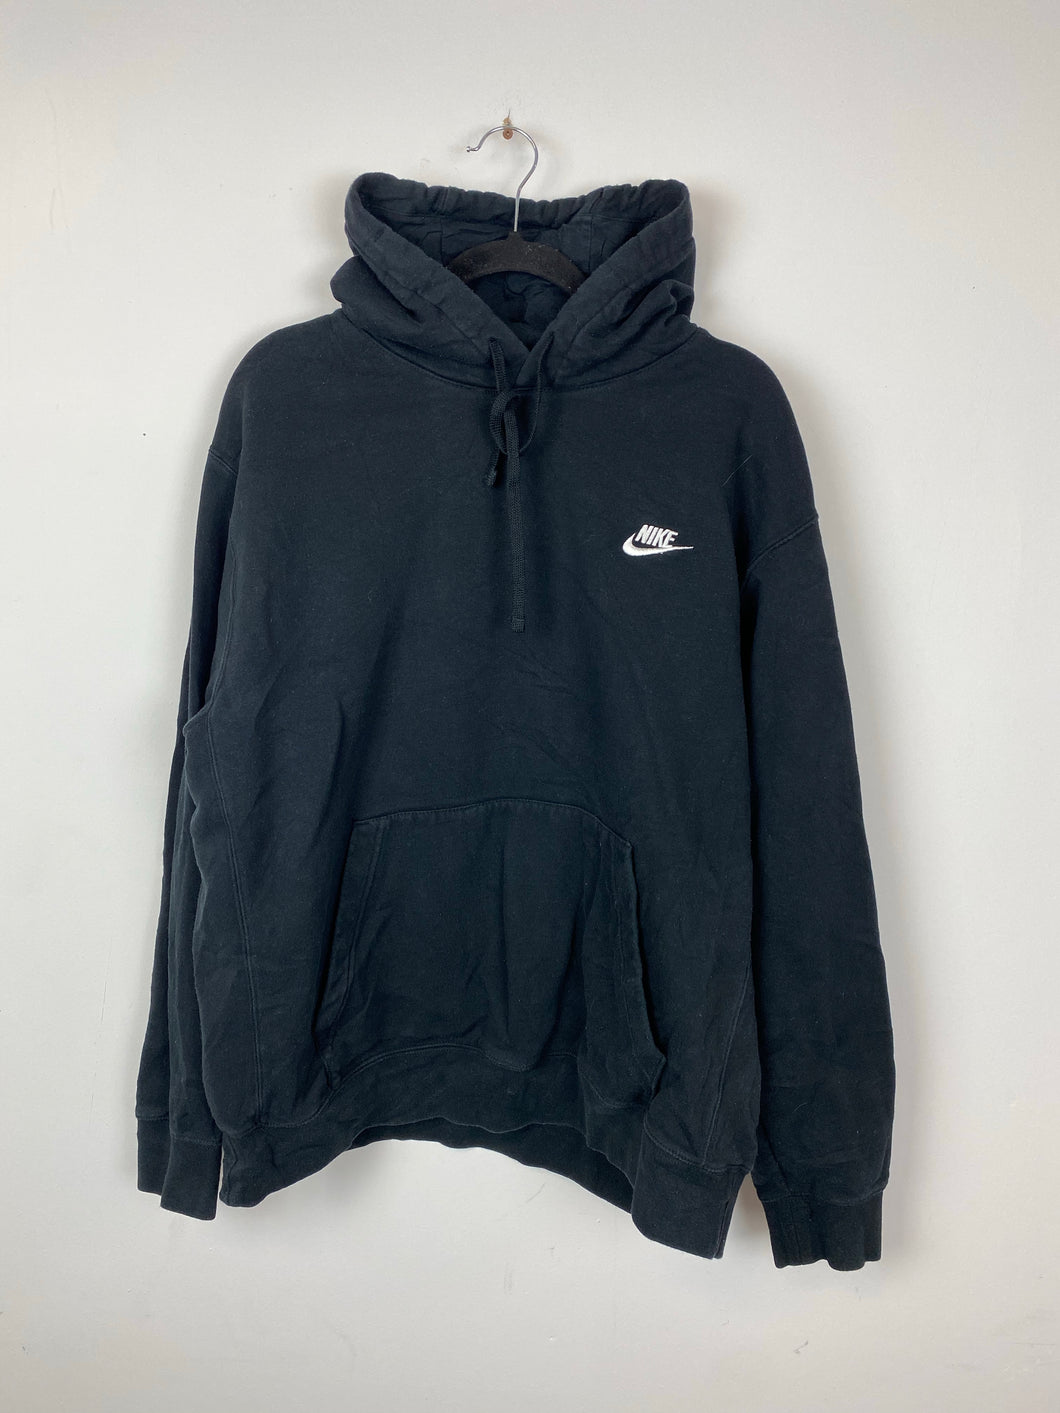 Late 2000s Nike hoodie